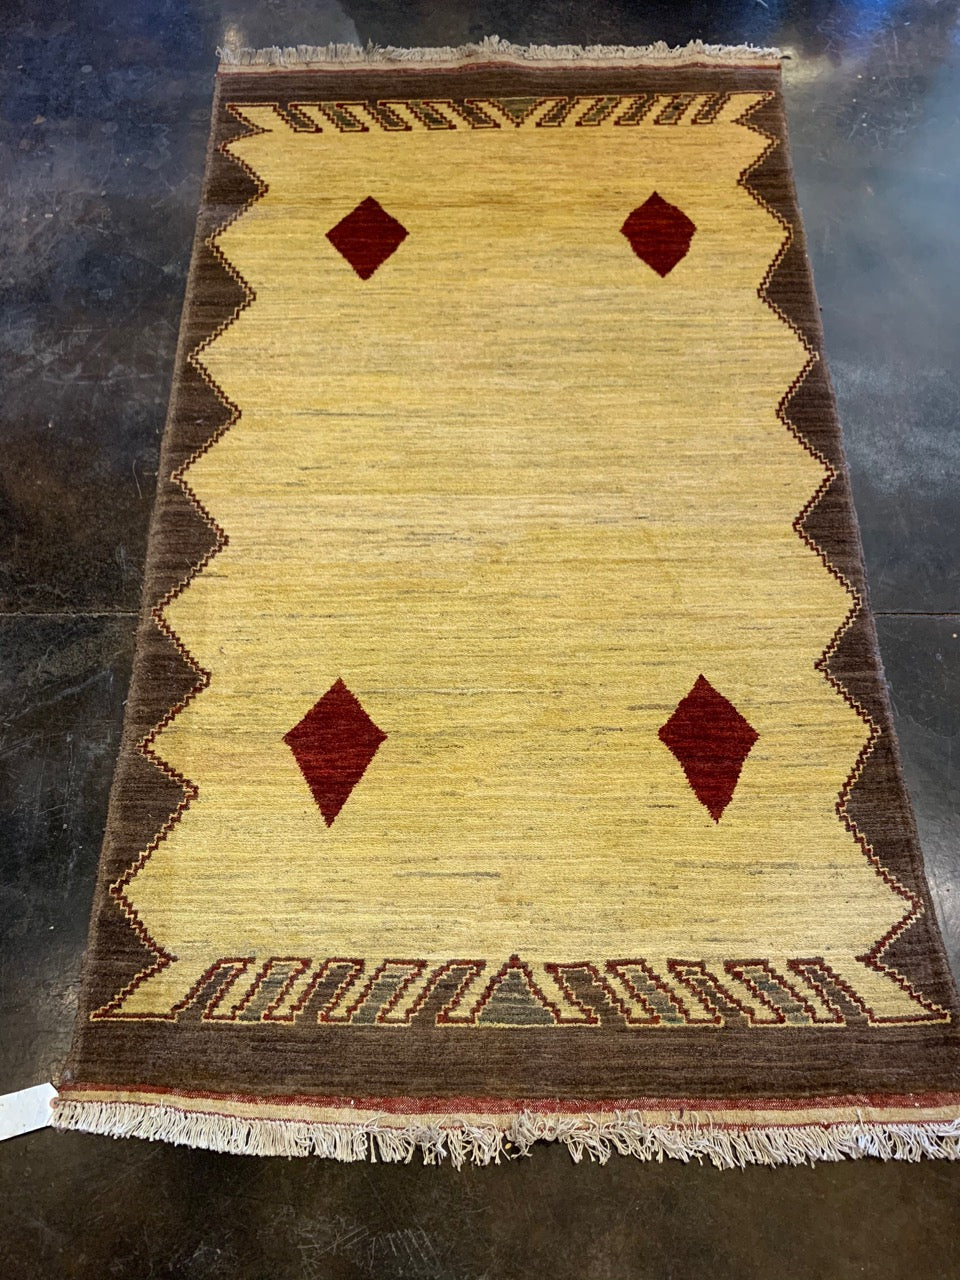 Handmade 4x6 wool rug